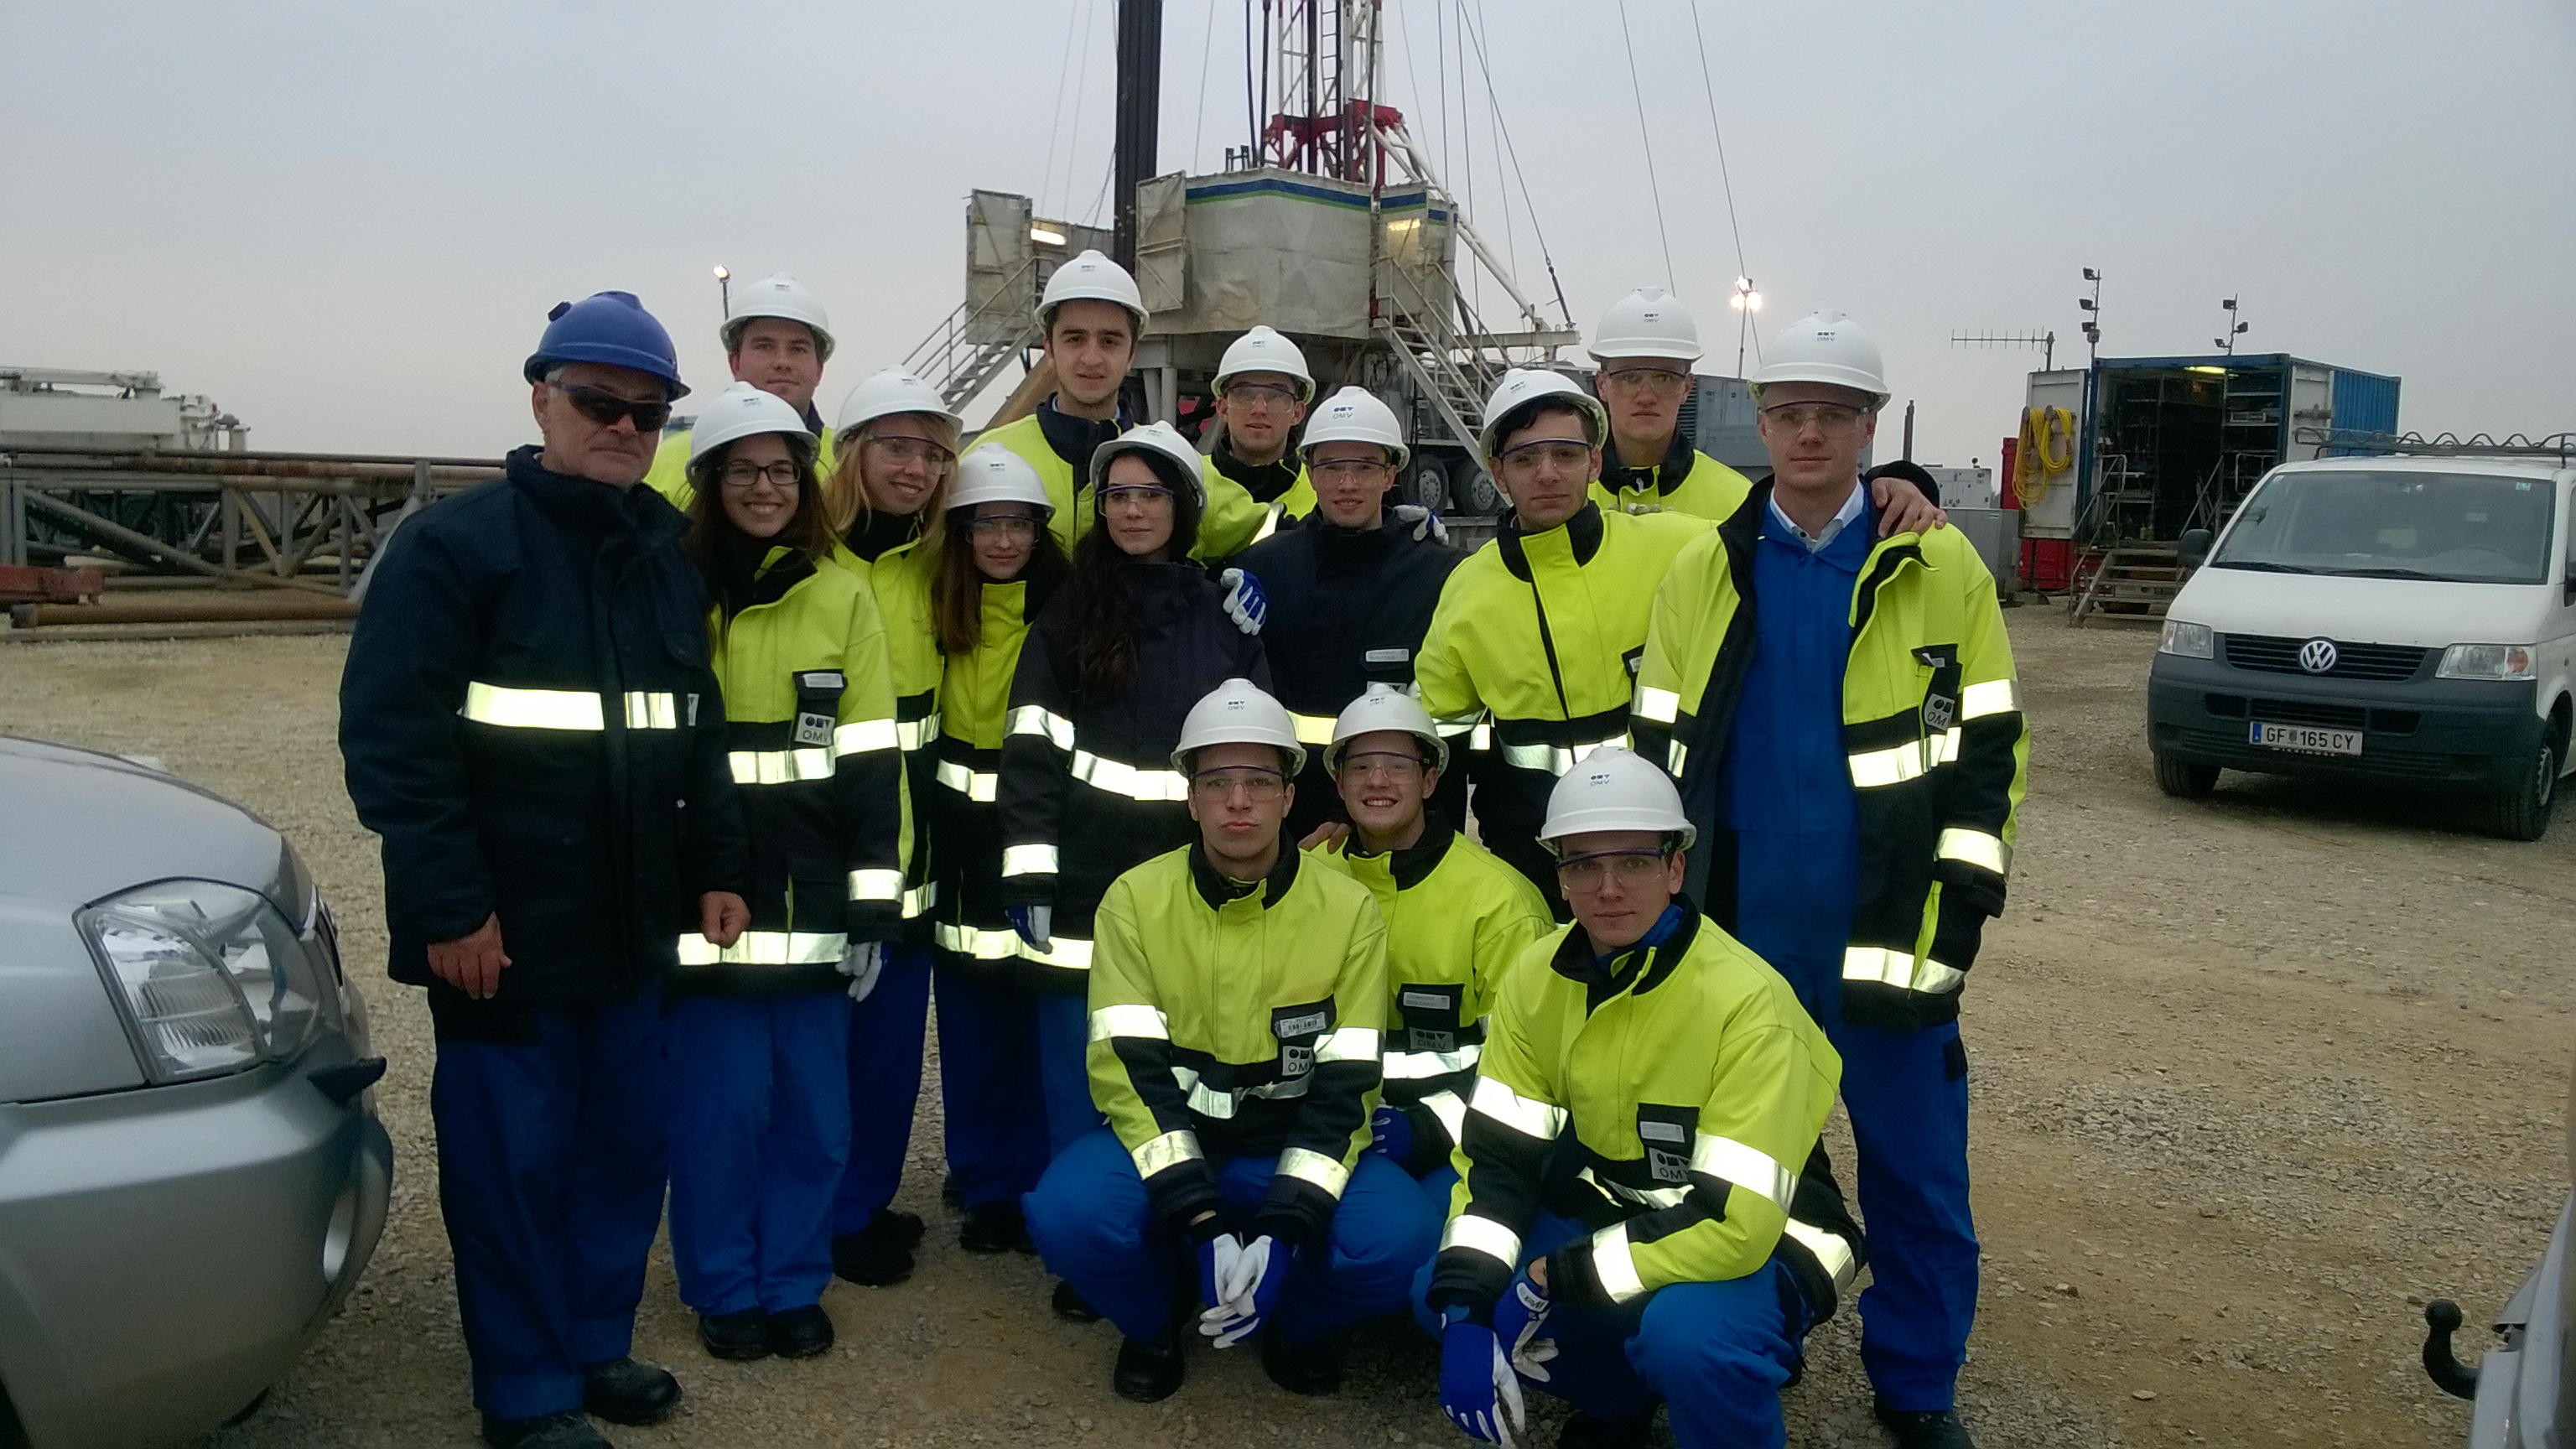 Visit at a workover rig in OMV's Matzen oil field